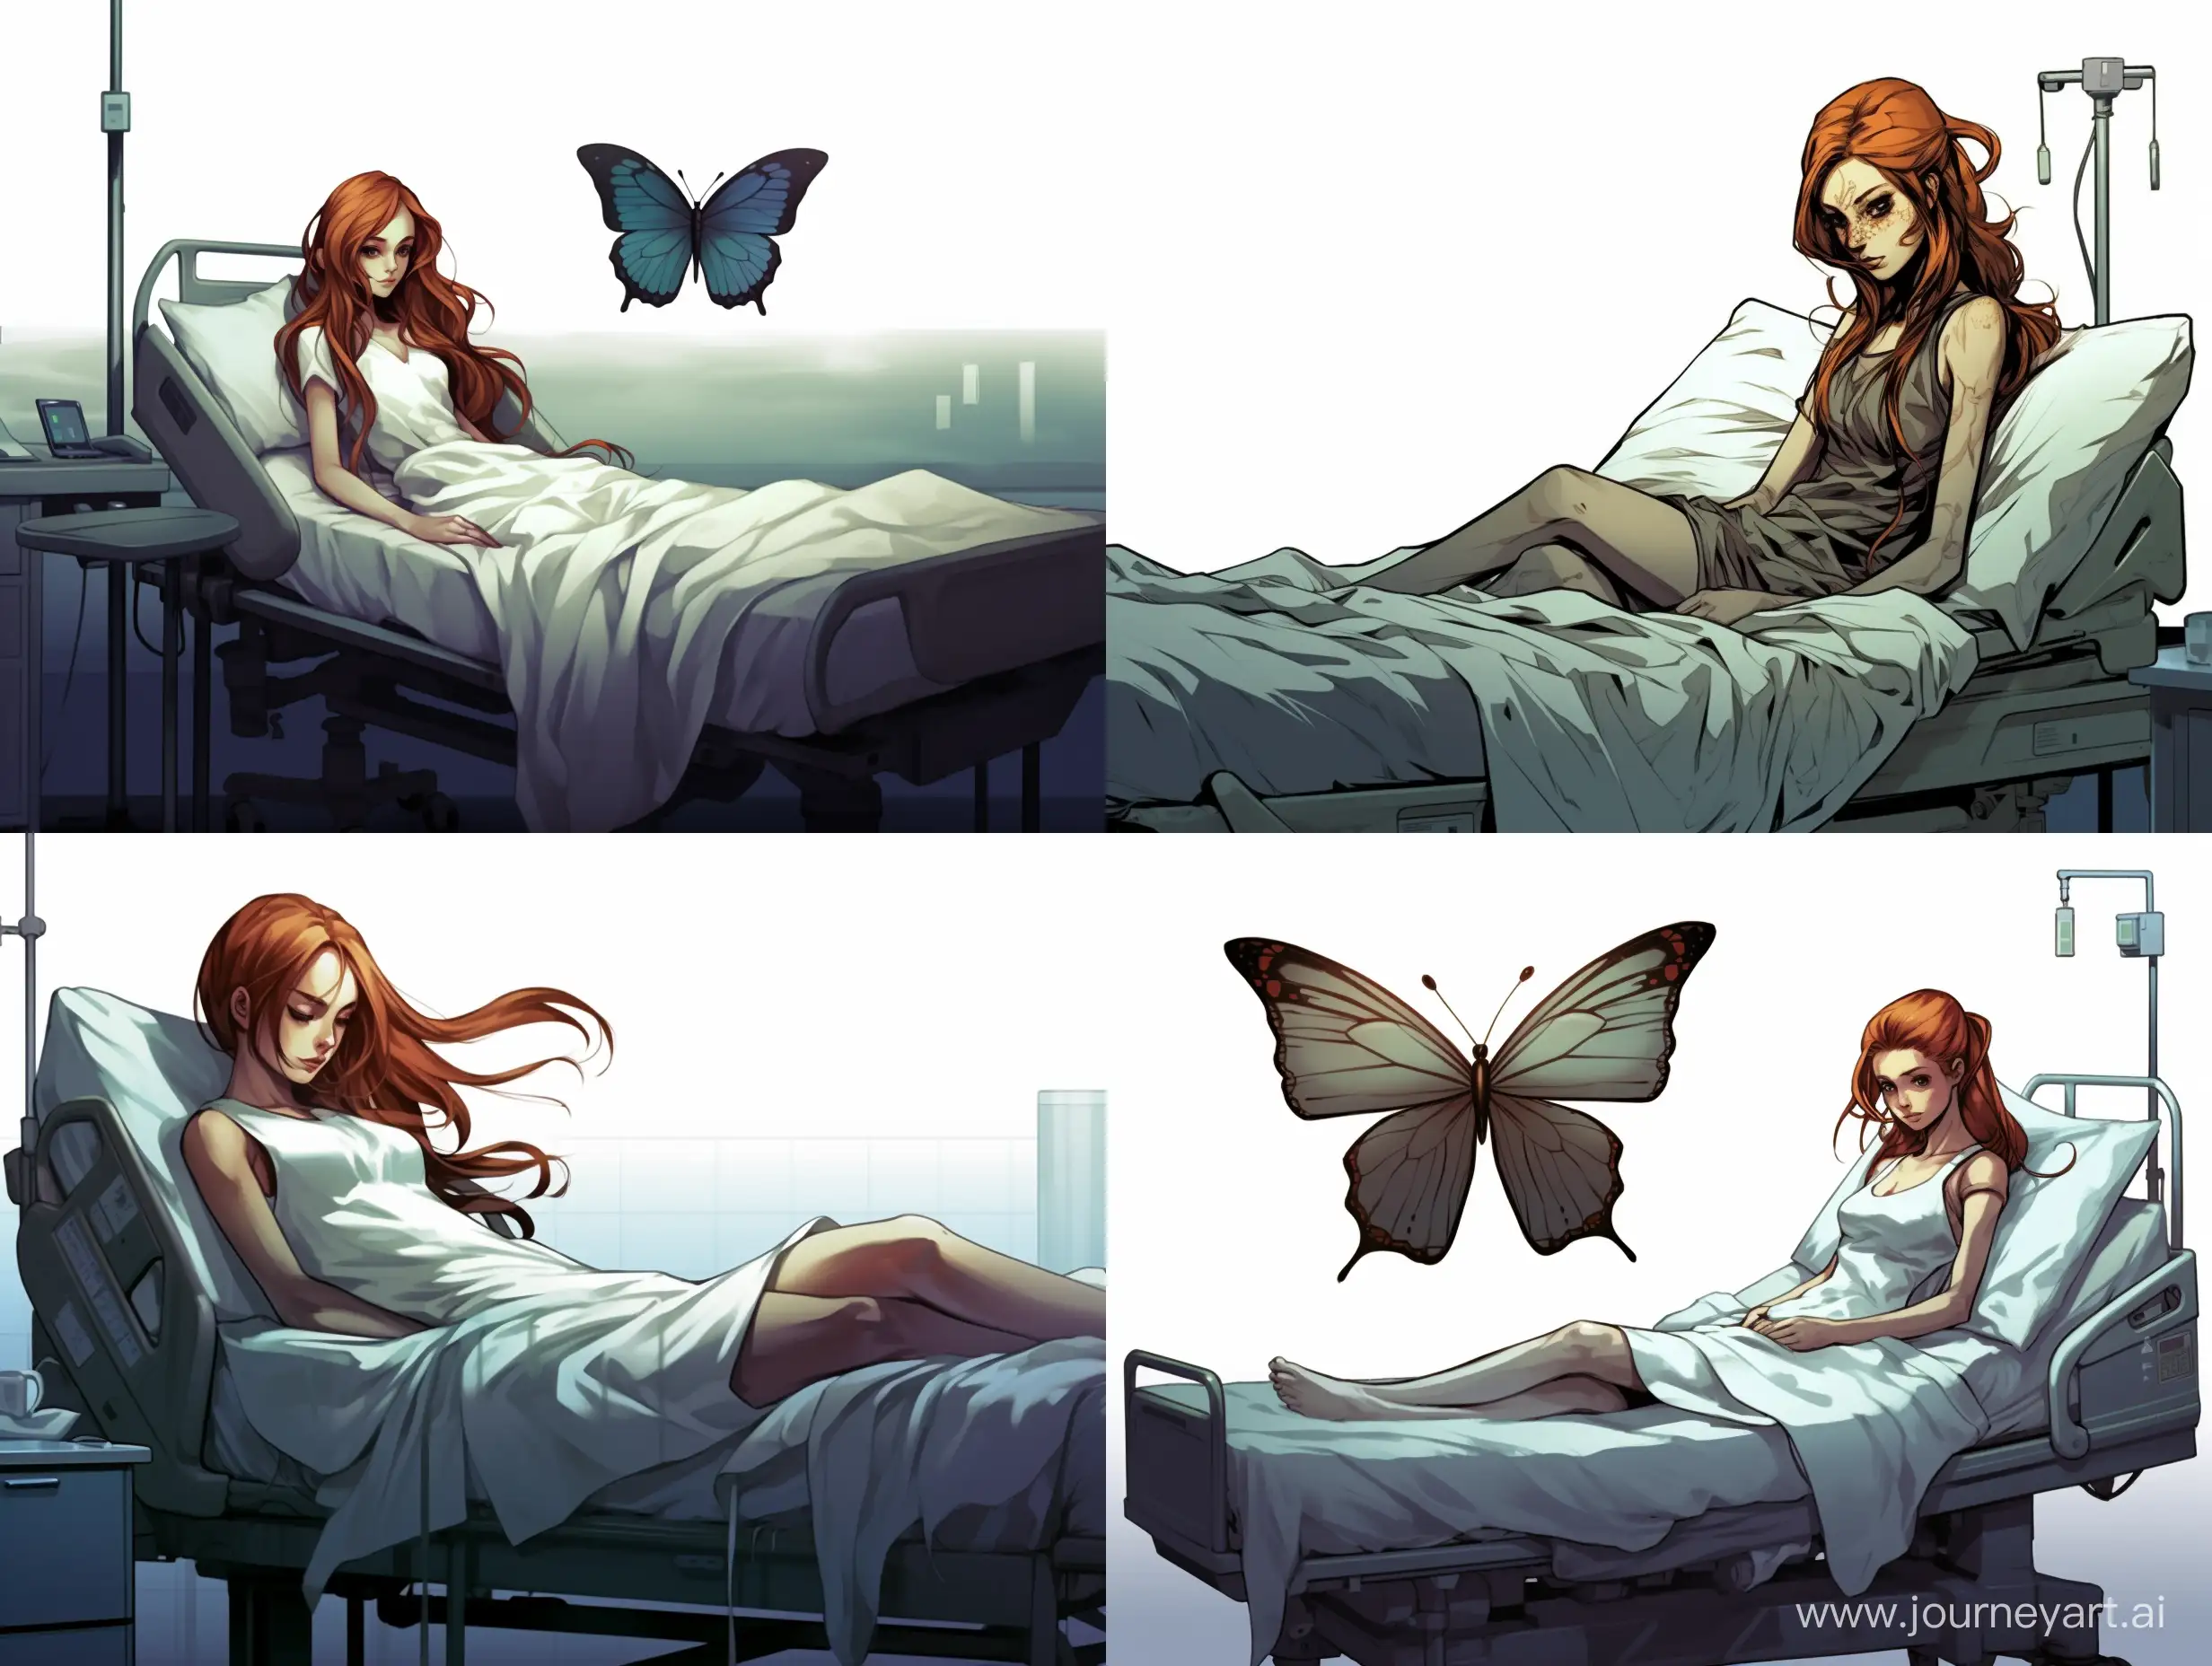 Mutant-Butterfly-Hybrid-in-90s-Anime-Style-Hospital-Scene